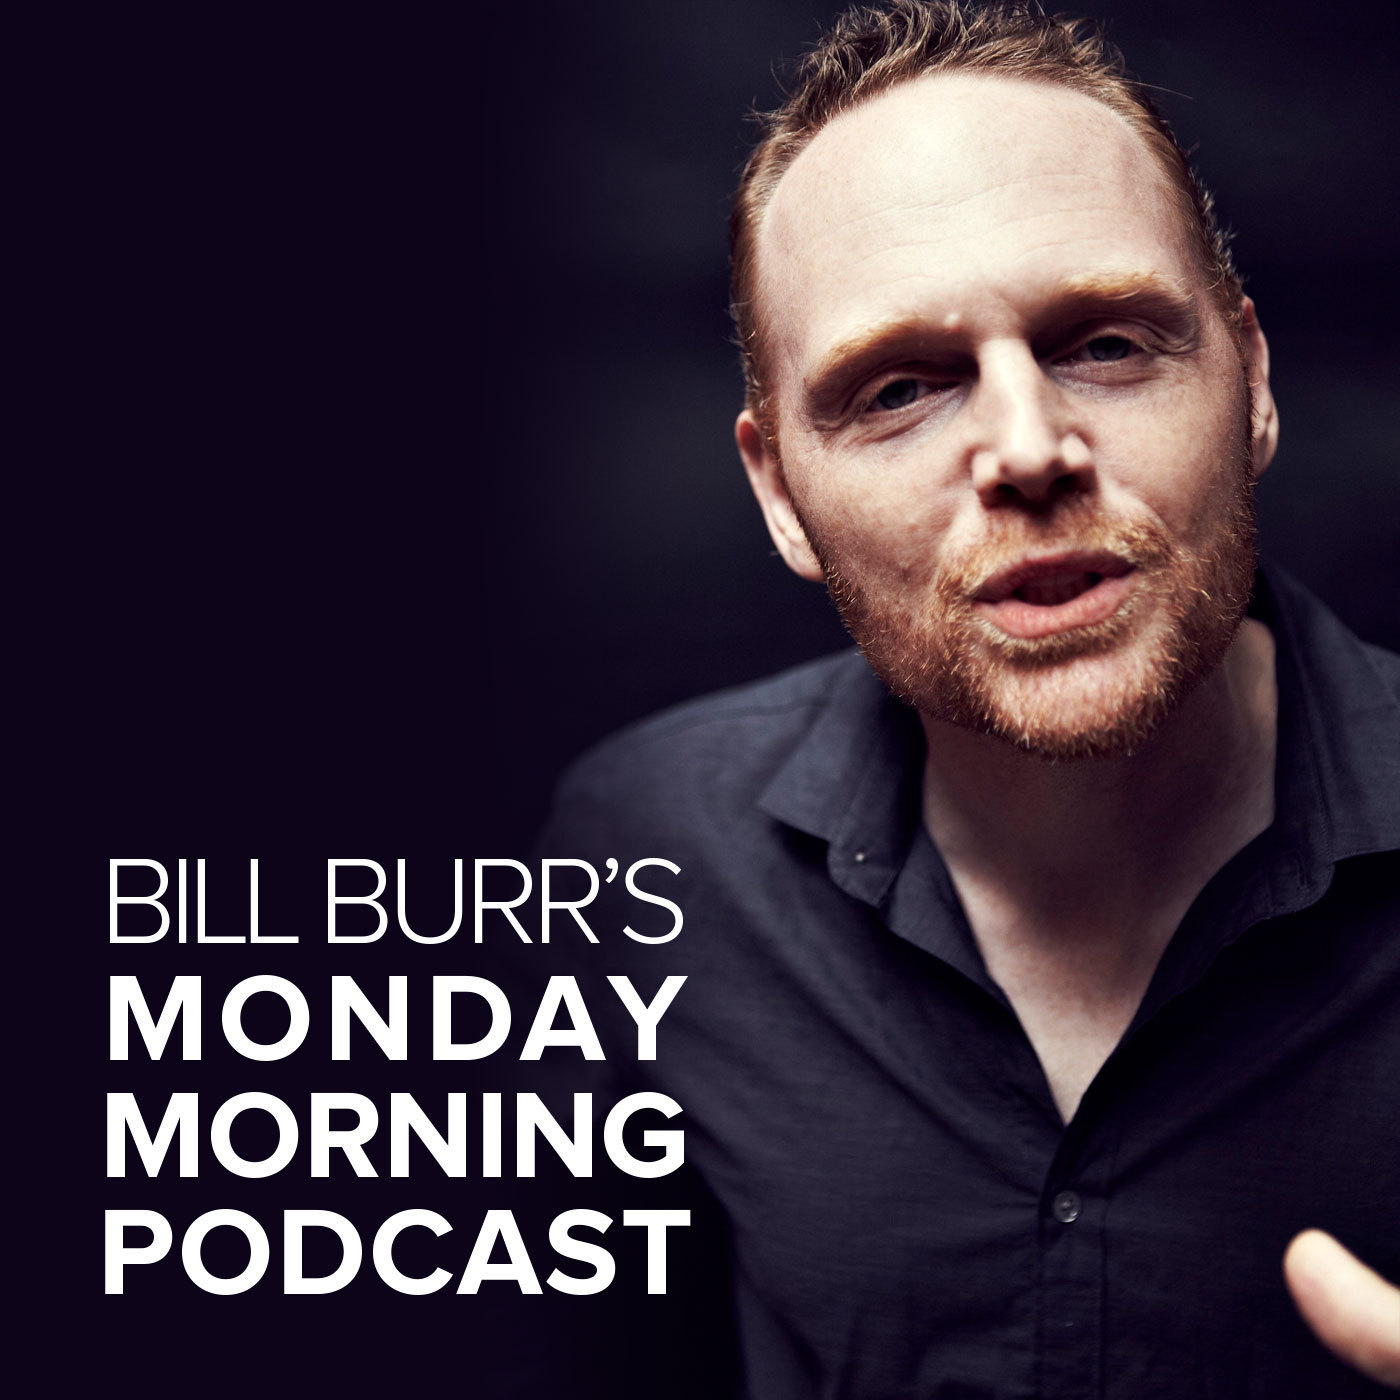 Monday Morning Podcast 8-8-16